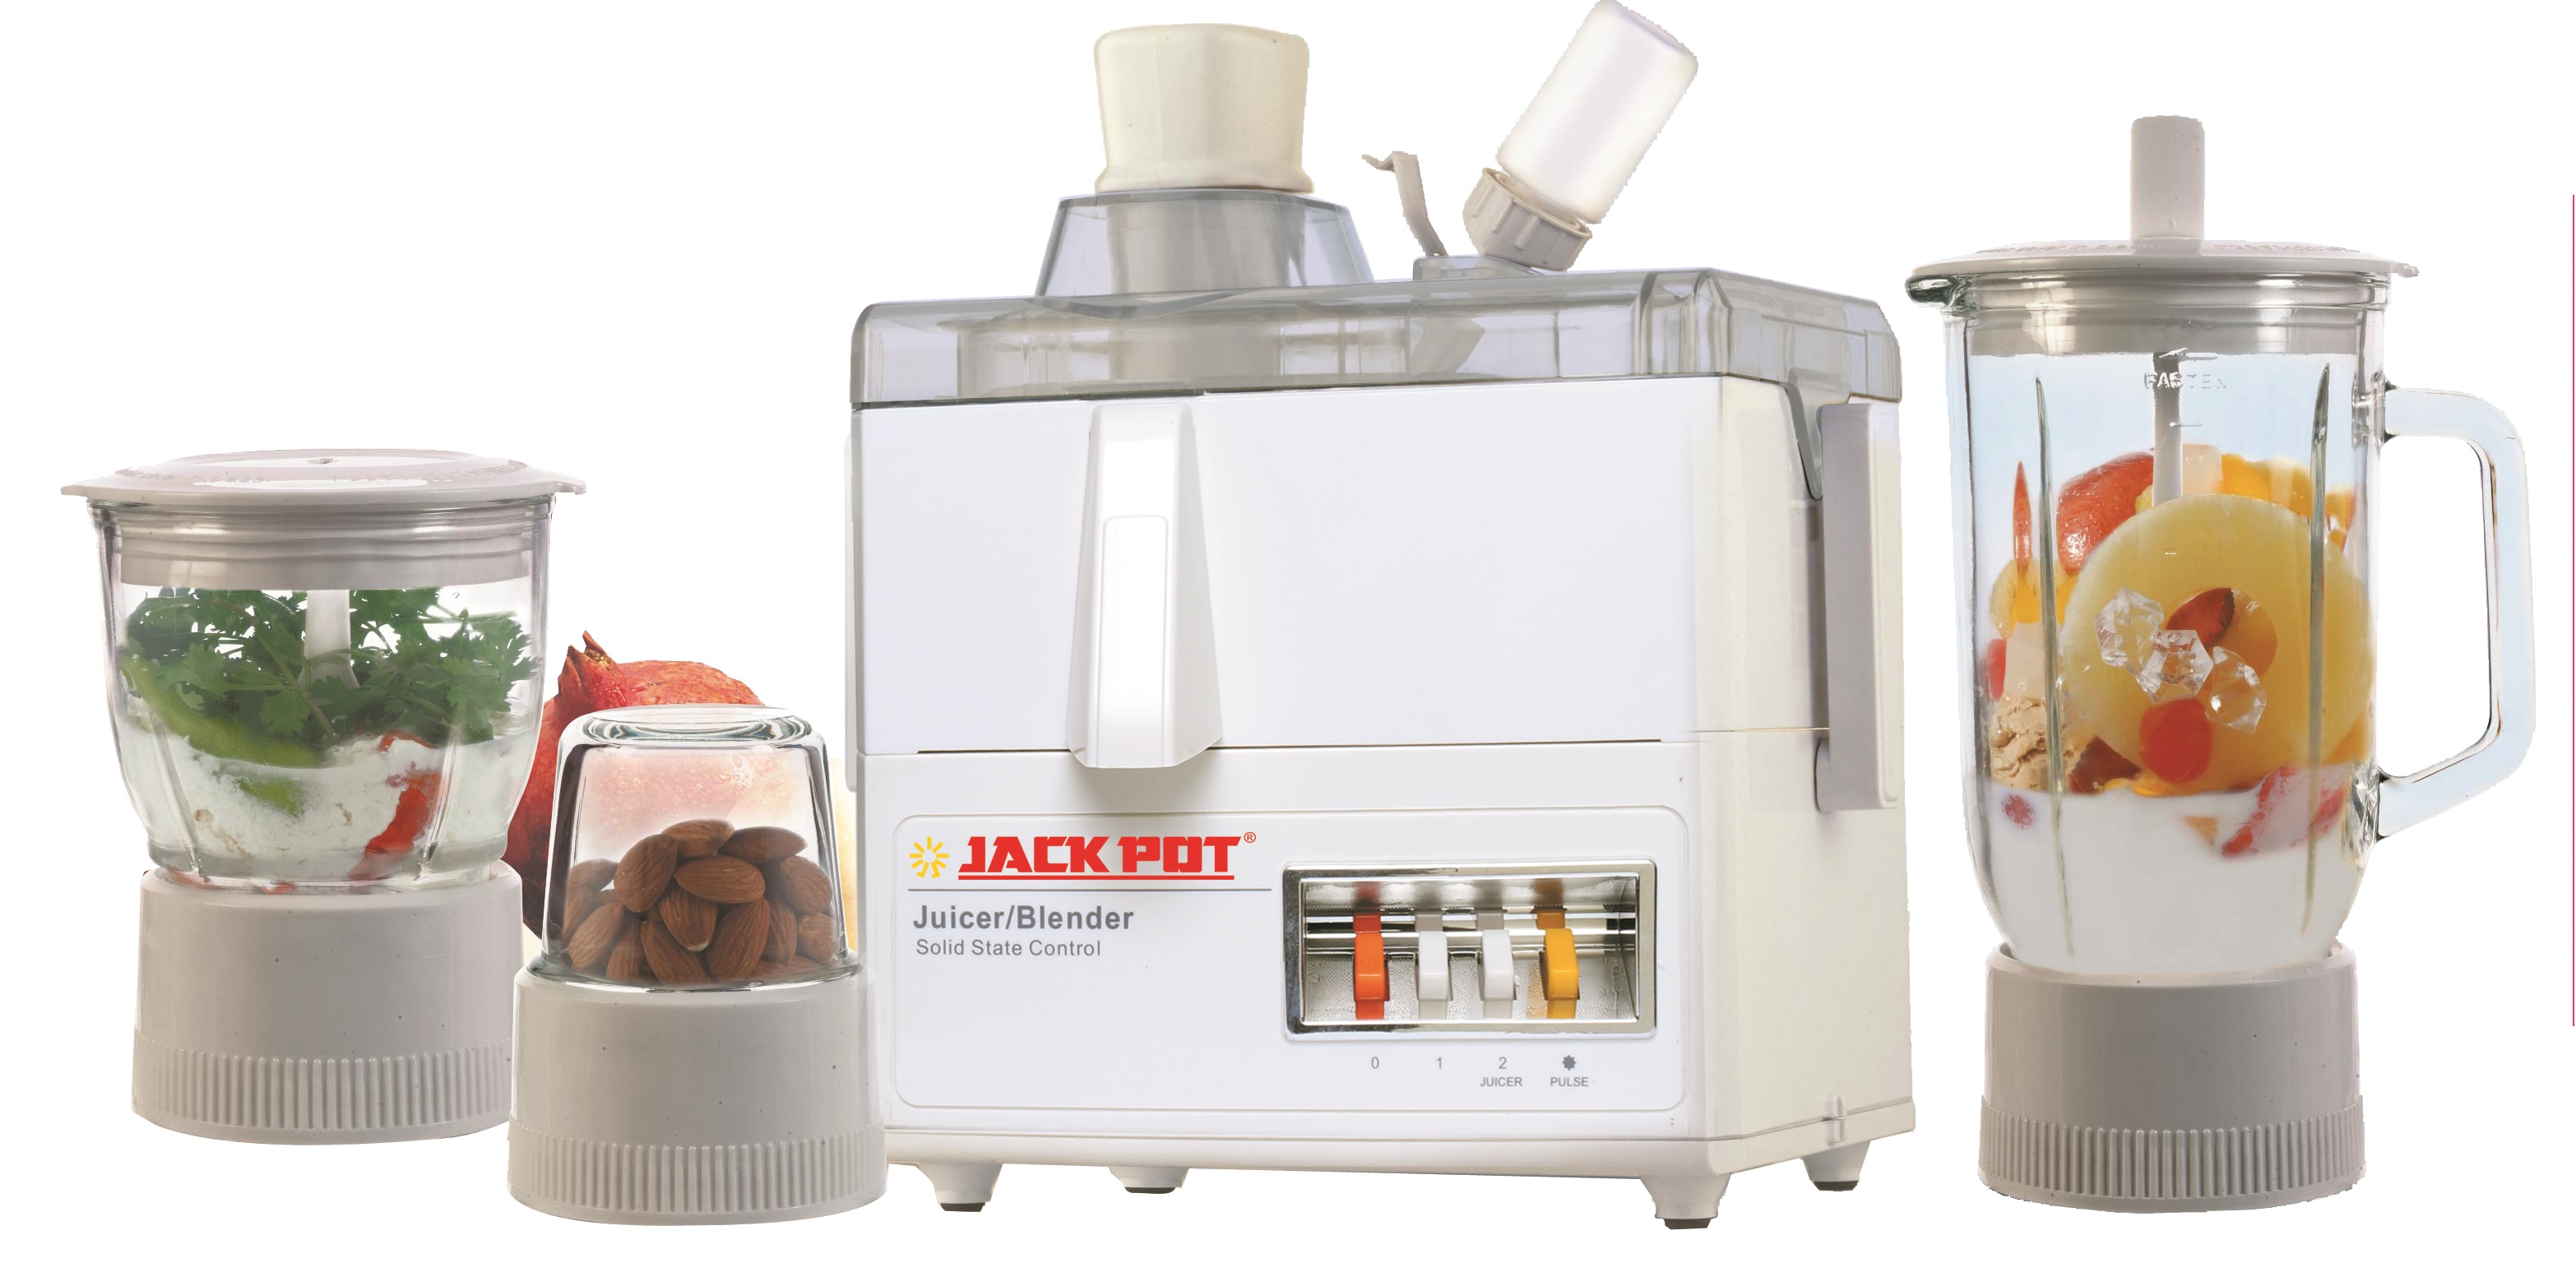 Jackpot Jp-179 Juicer, Blender And Mixer